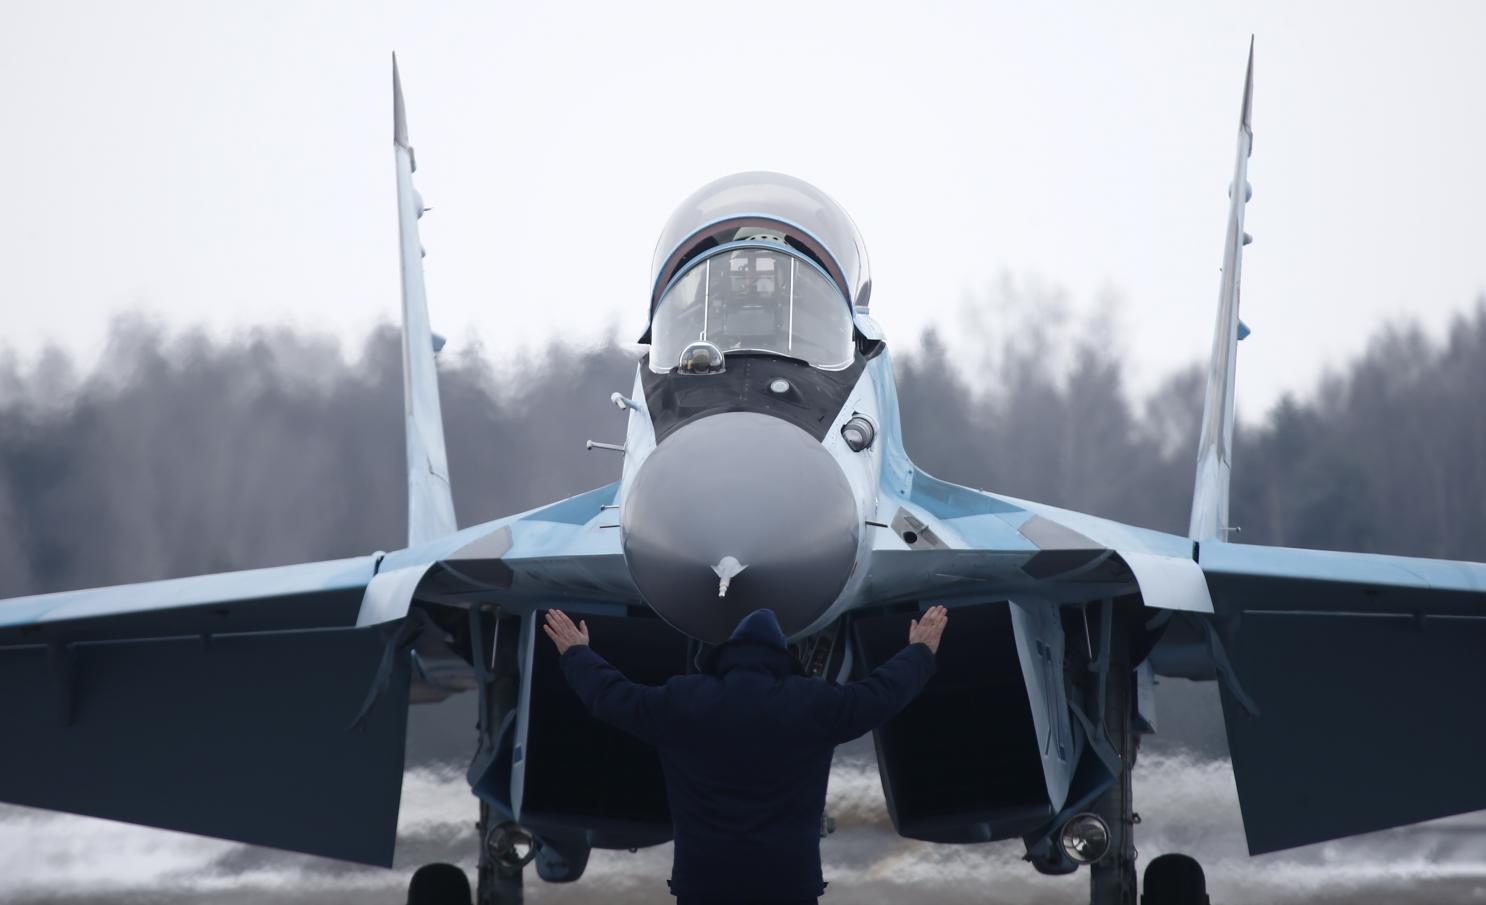 MiG-35: Ανακαλύψτε όλα τα «μυστικά» του ρωσικού μαχητικού 4++ γενιάς σε ένα βίντεο